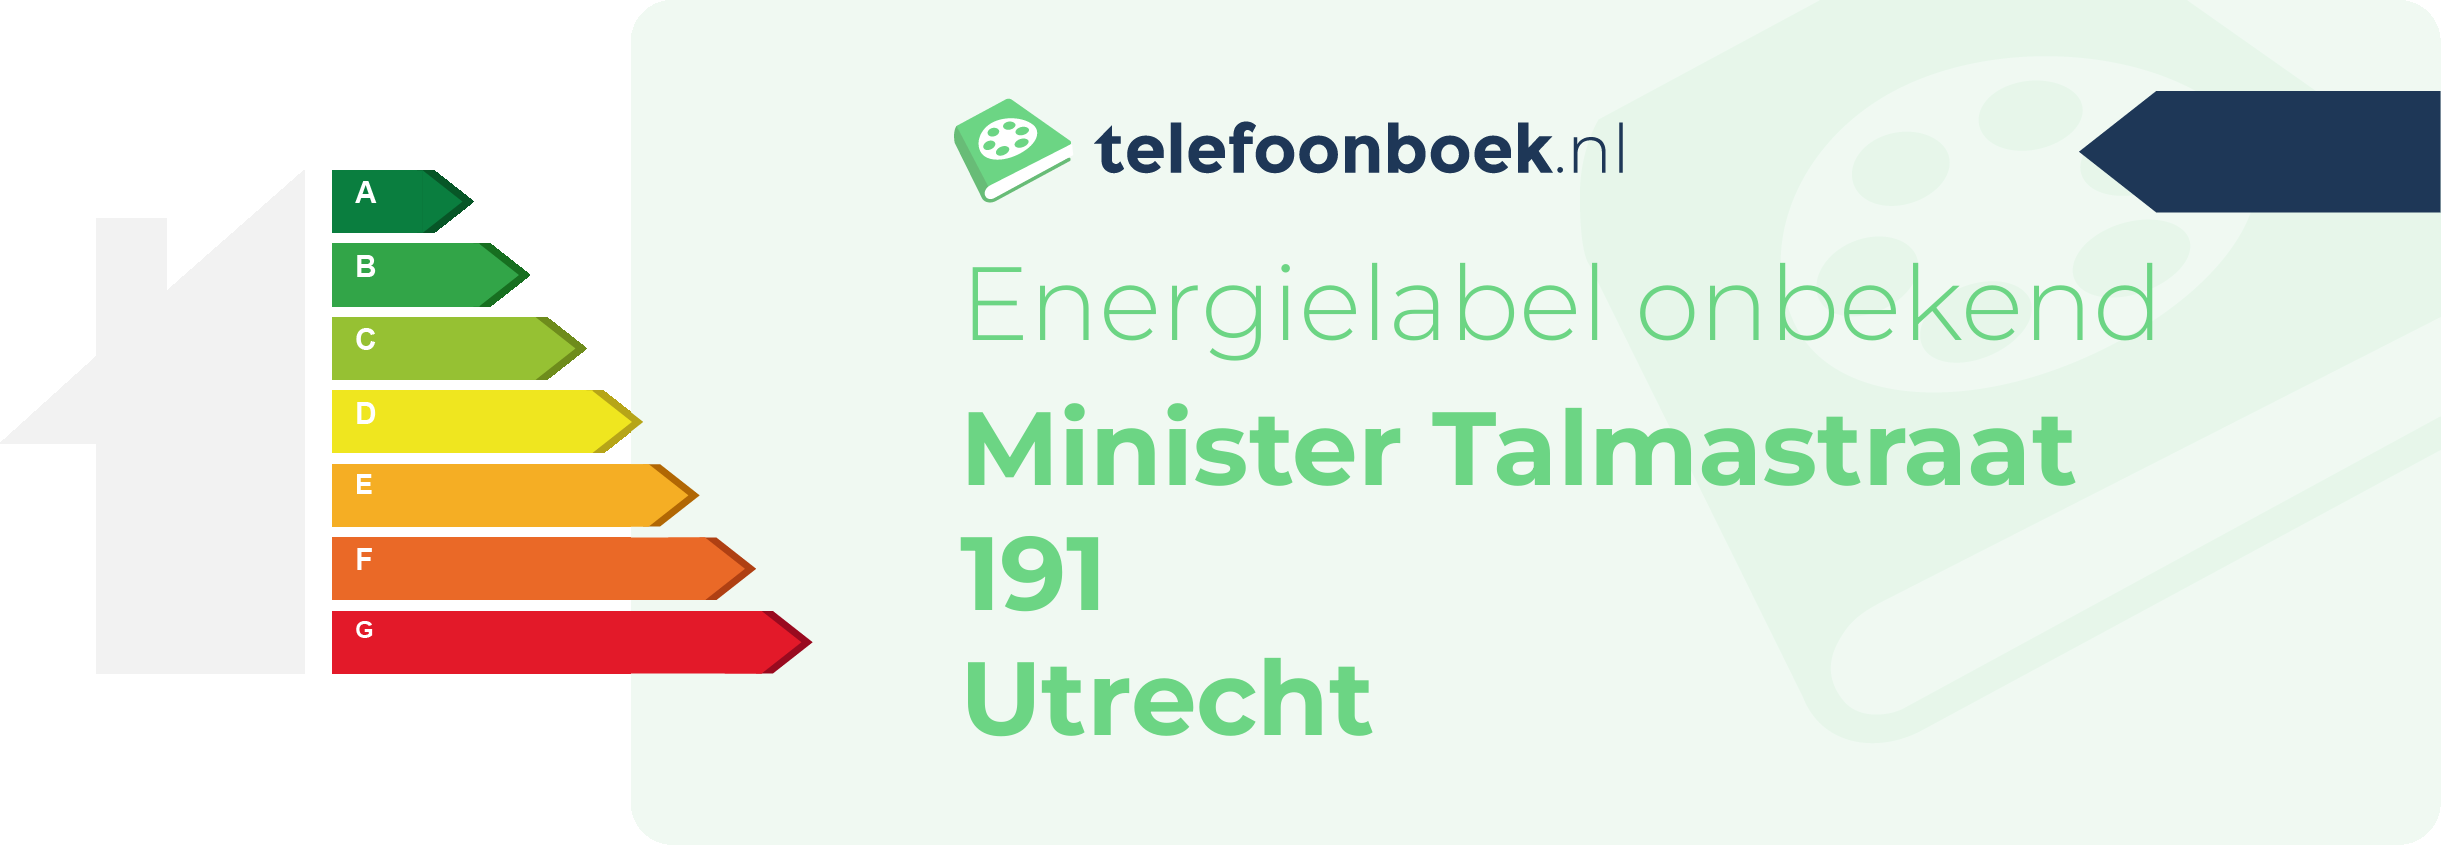 Energielabel Minister Talmastraat 191 Utrecht